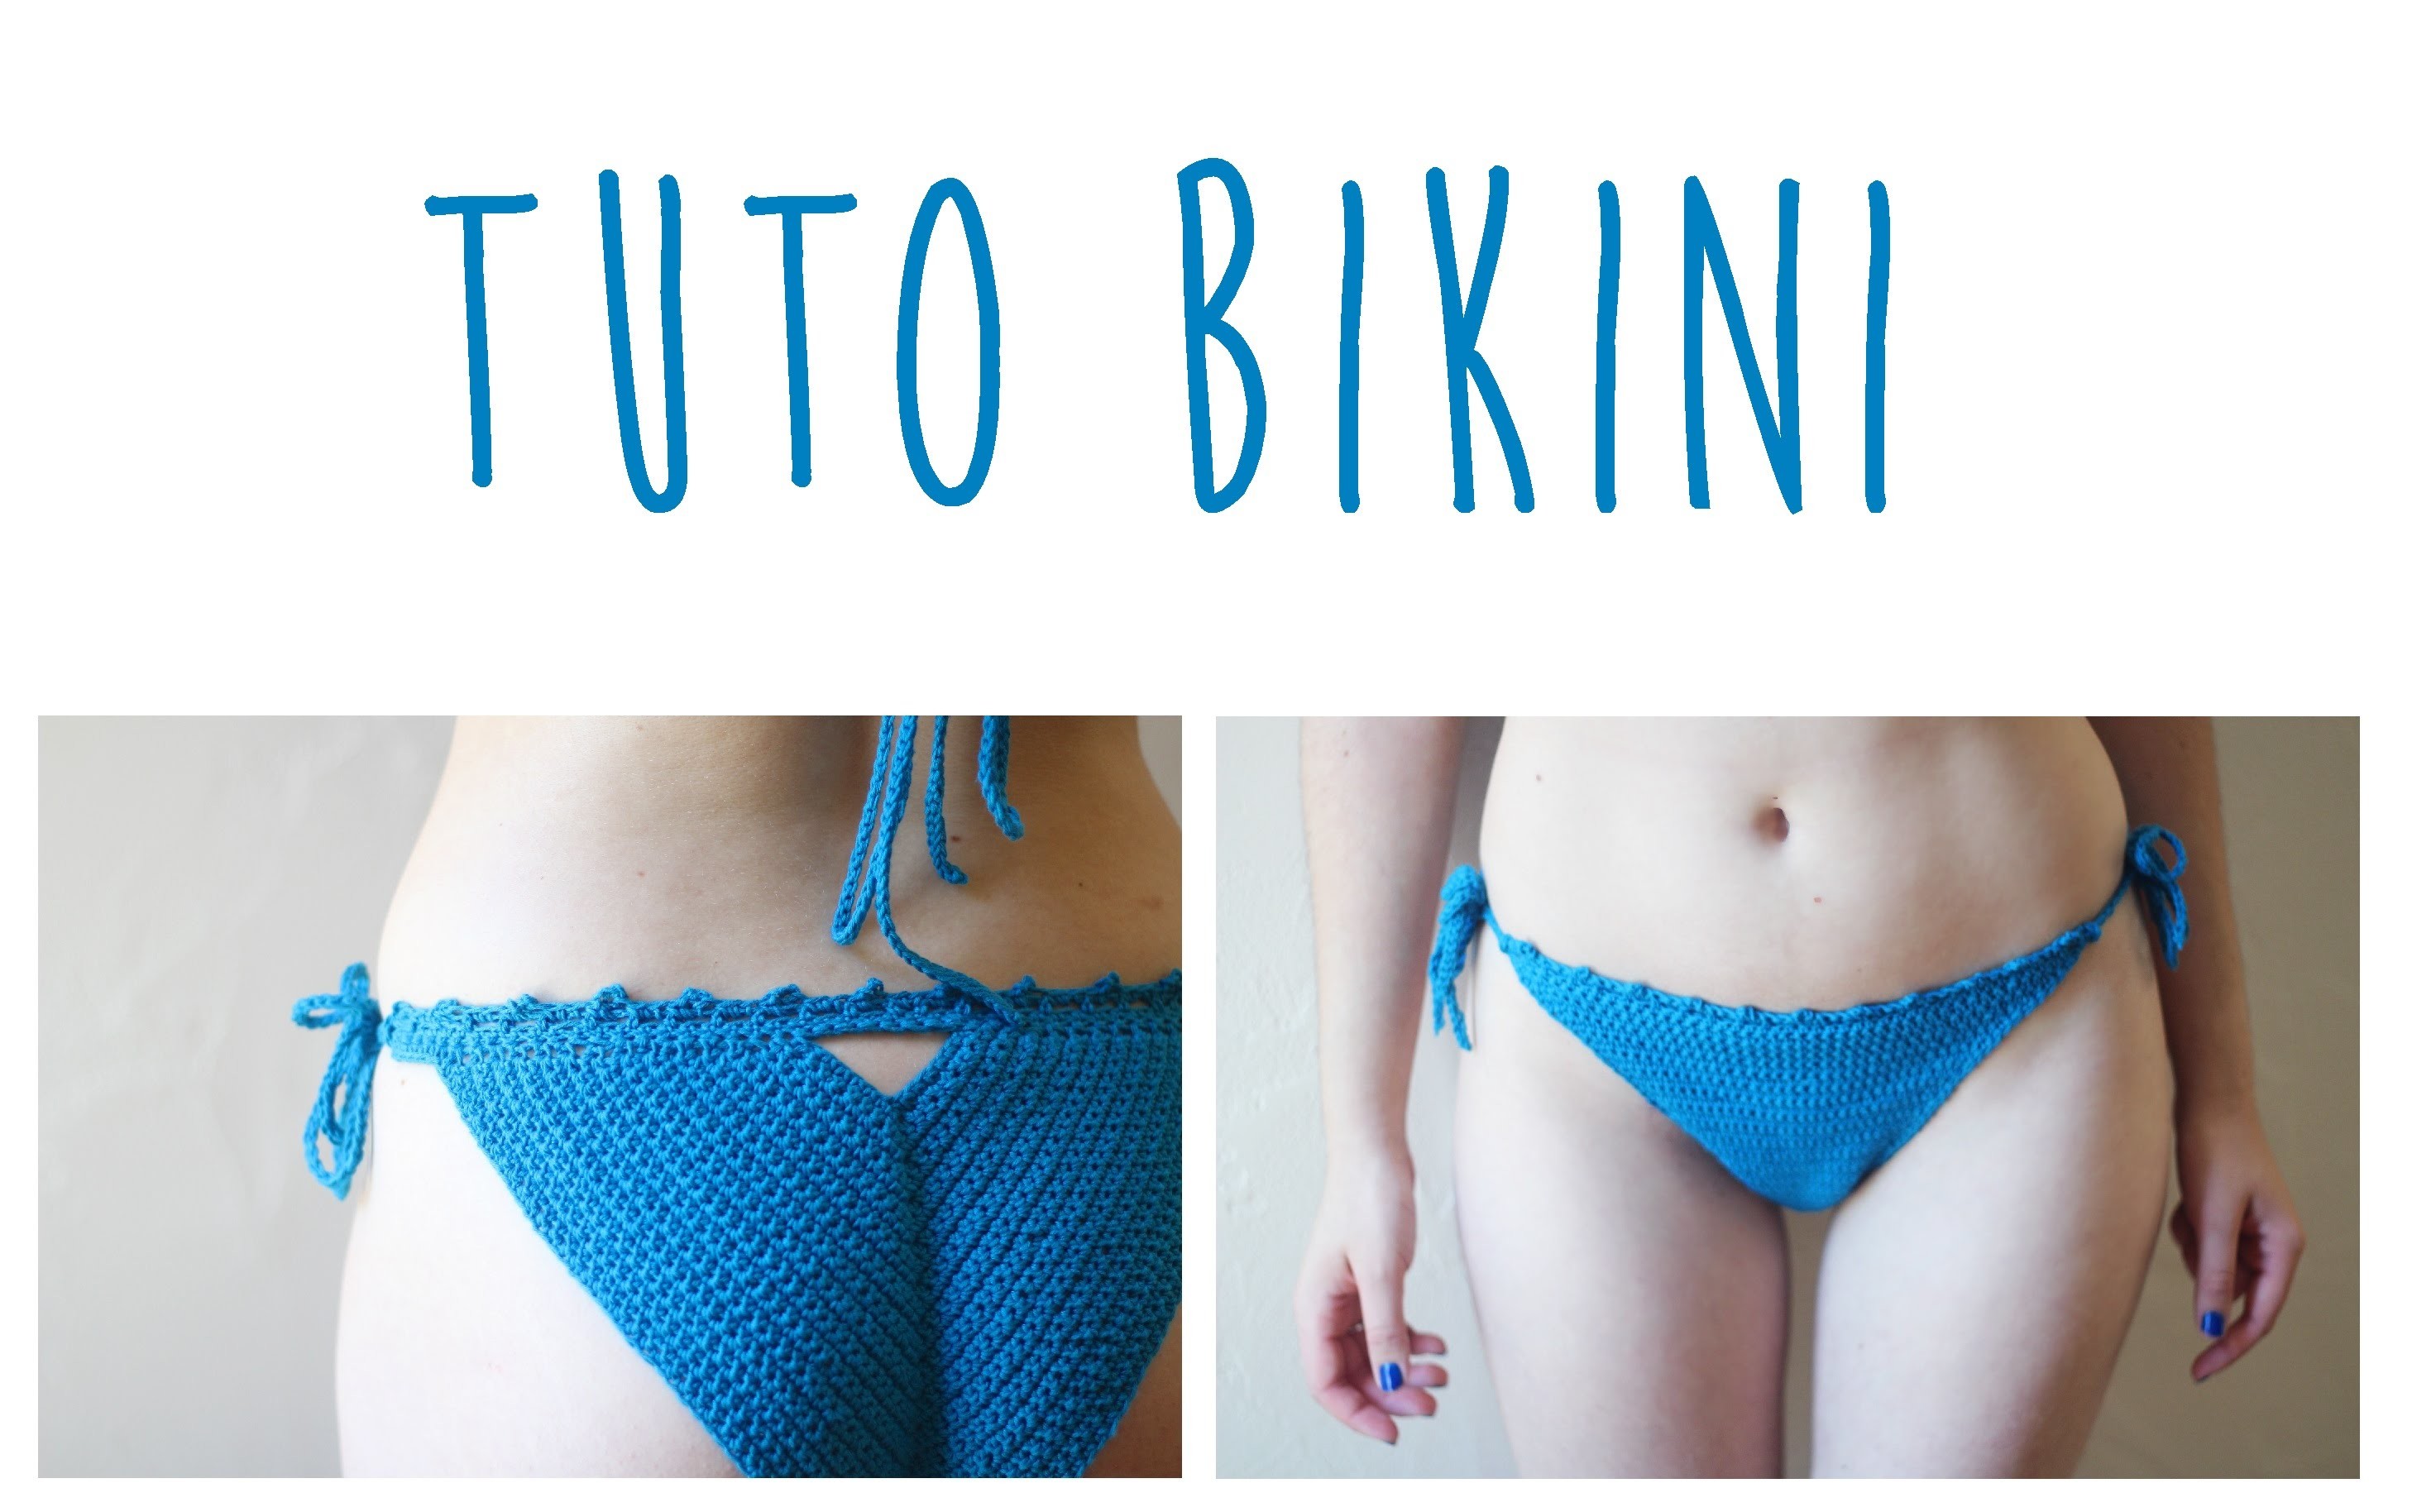 Tuto bikini au crochet pour l'été (bas)